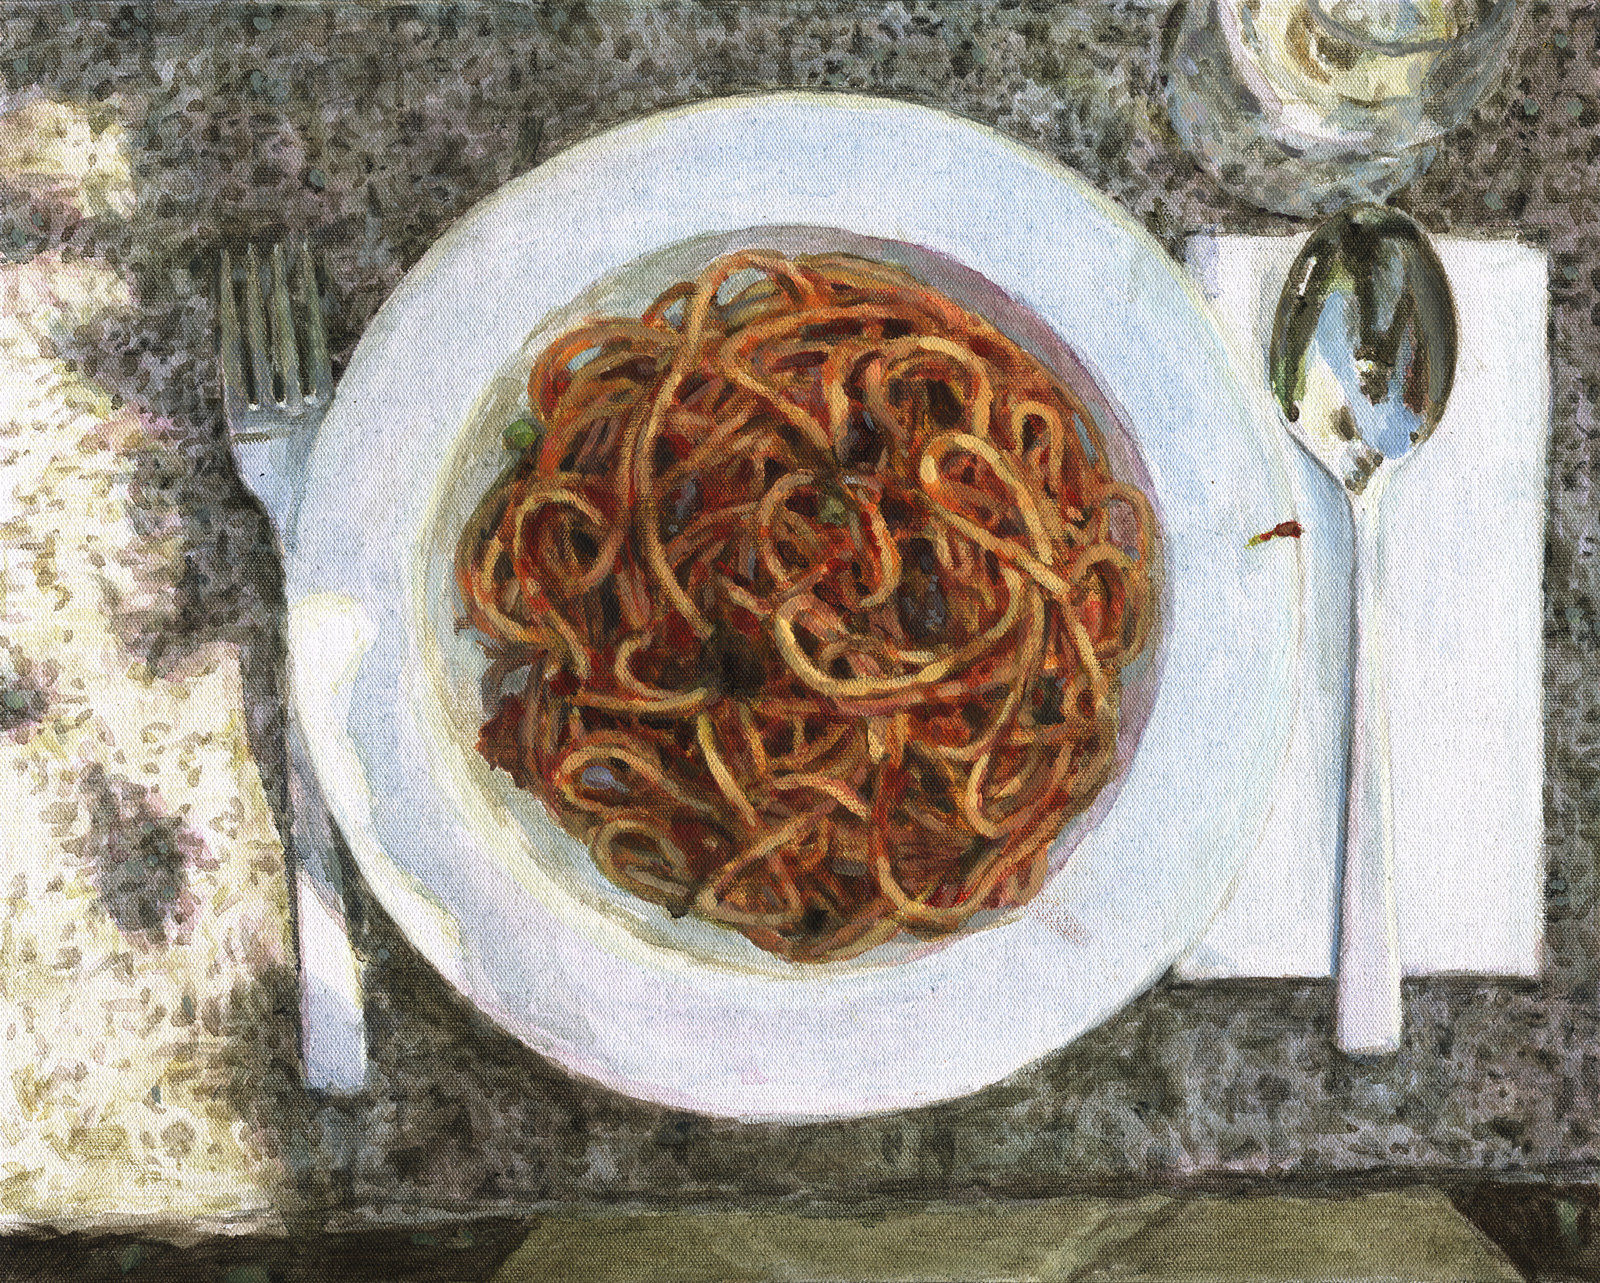 oculus-illustration-du-food-stilleben-spaghetti